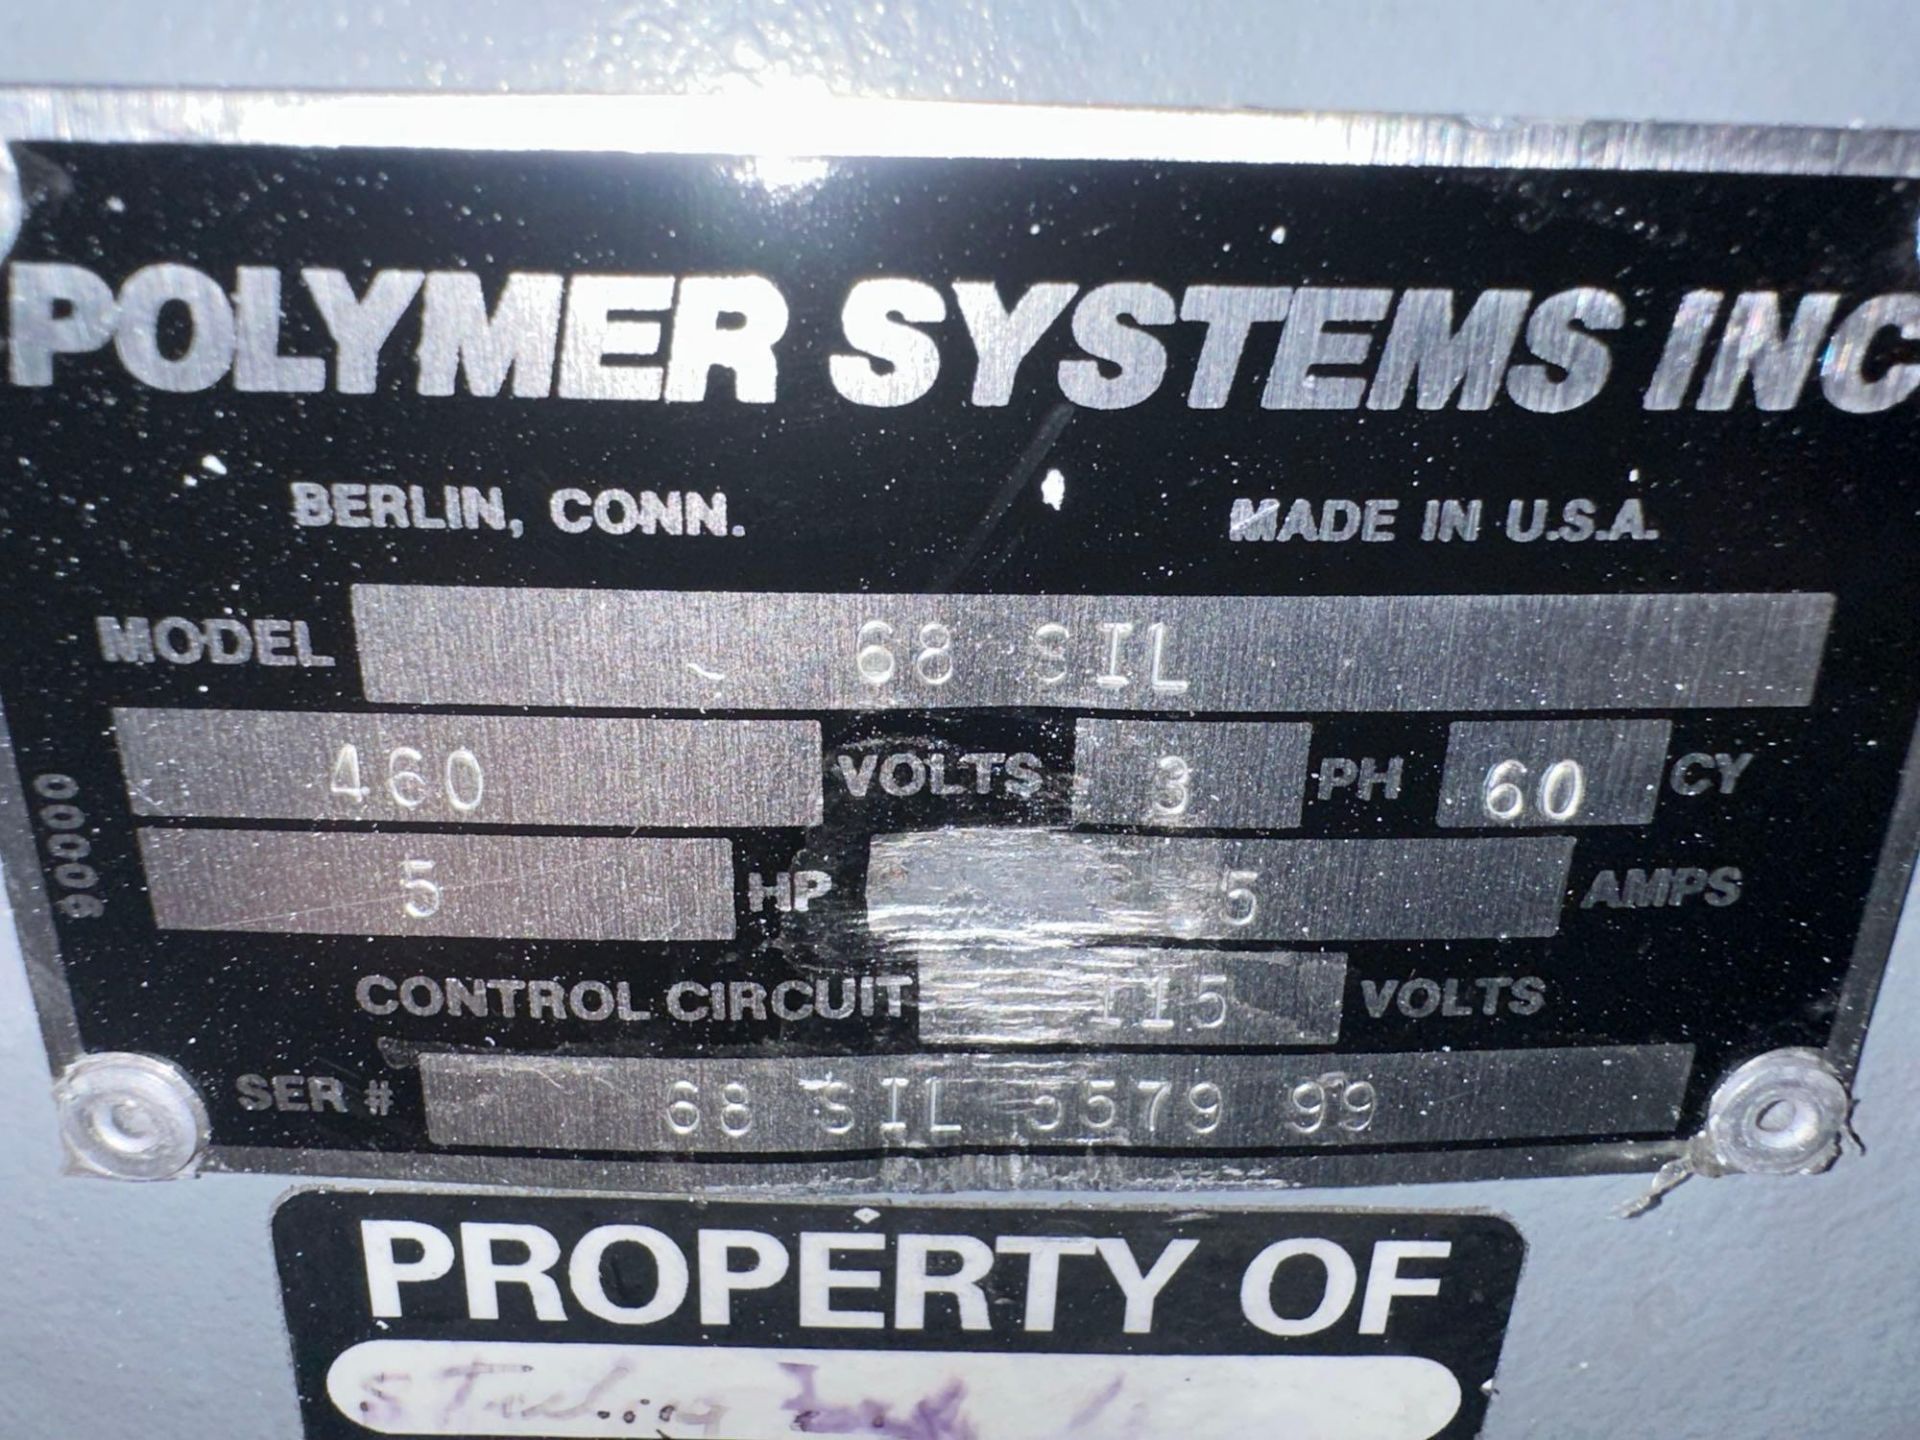 Palmer Systems 68 SIL Granulator, 5HP, 460 V, s/ 68 SIL 5579 99 - Image 6 of 6